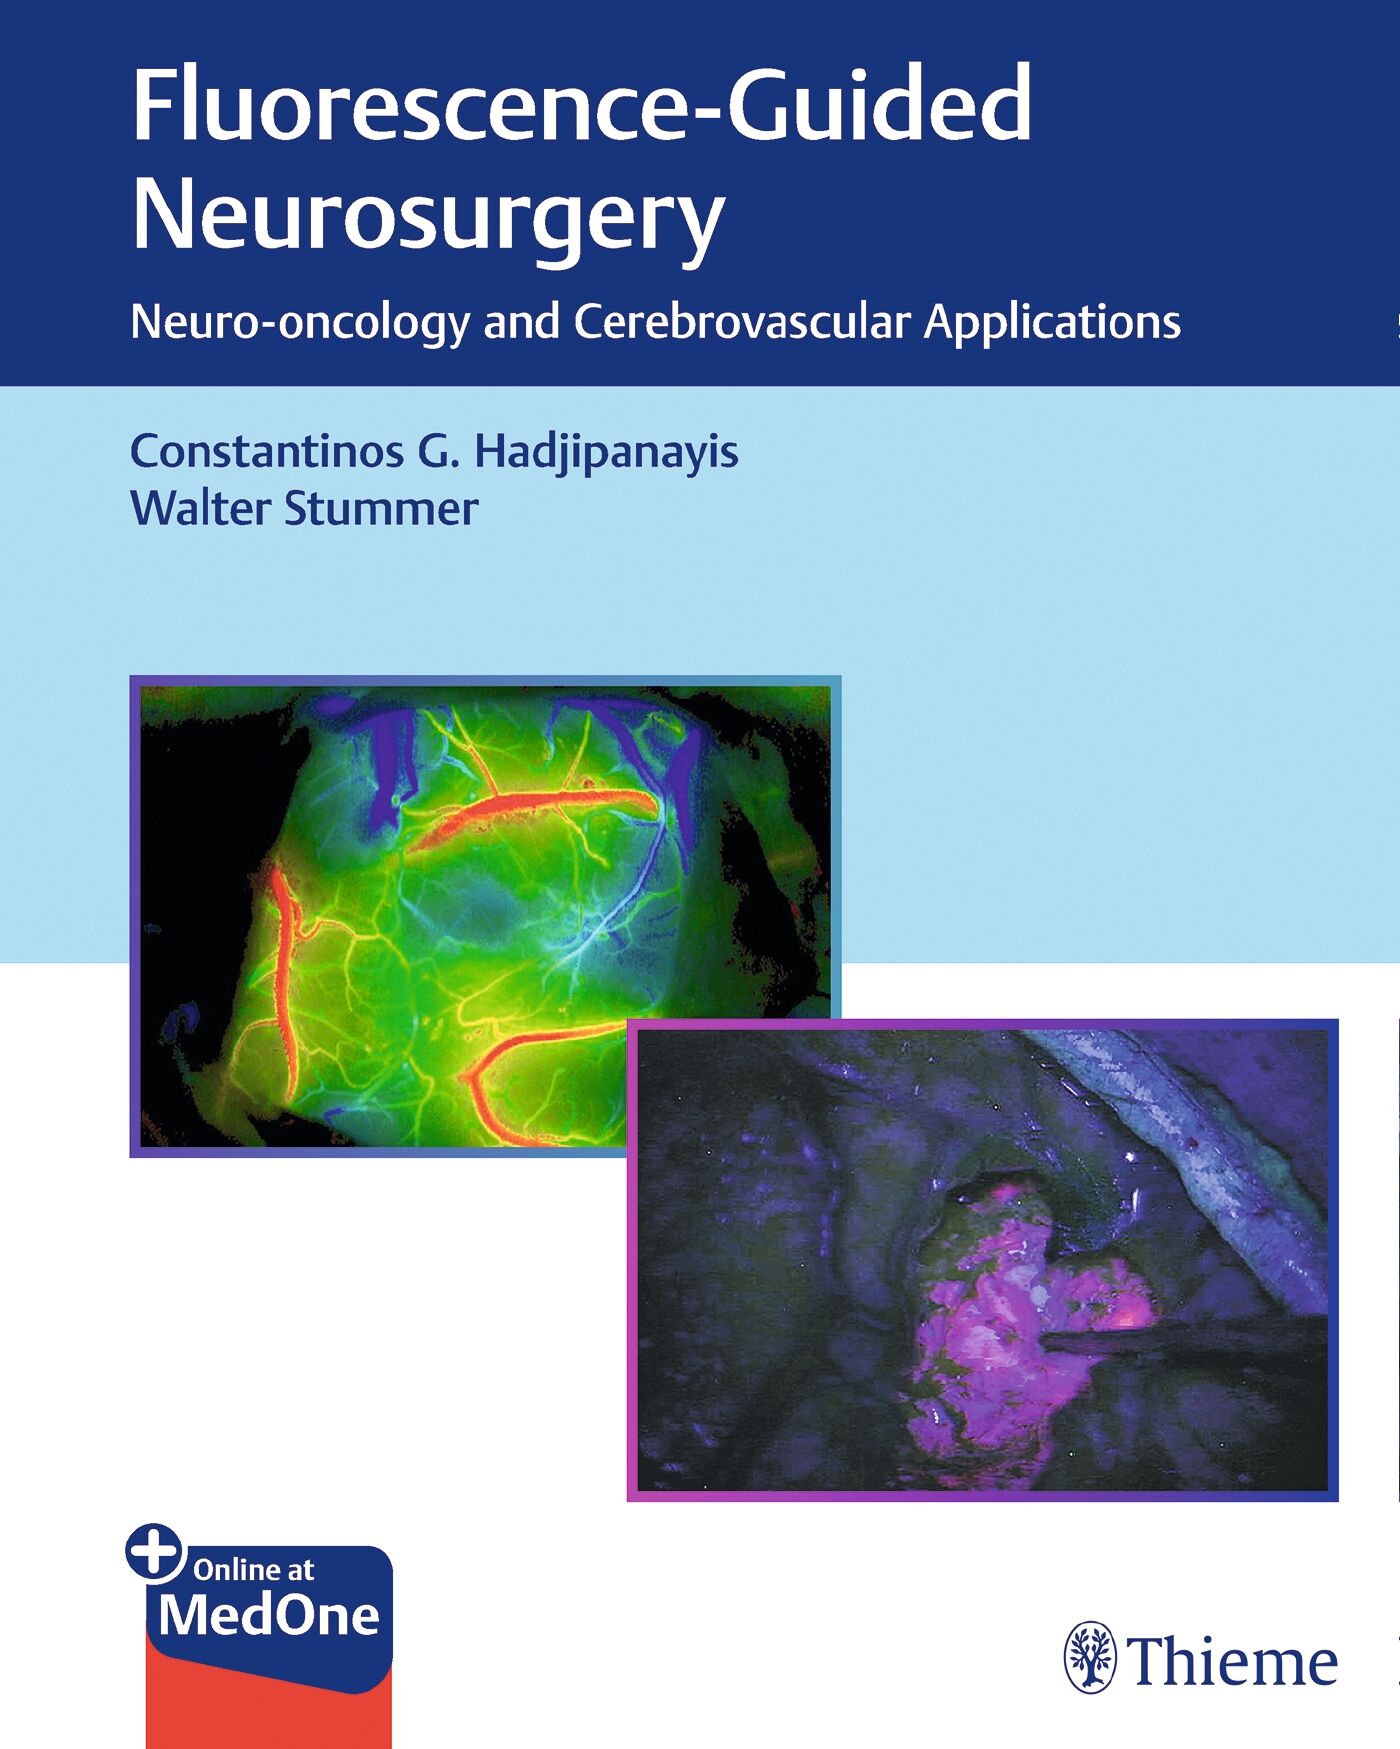 Fluorescence-Guided Neurosurgery, 9781626237148